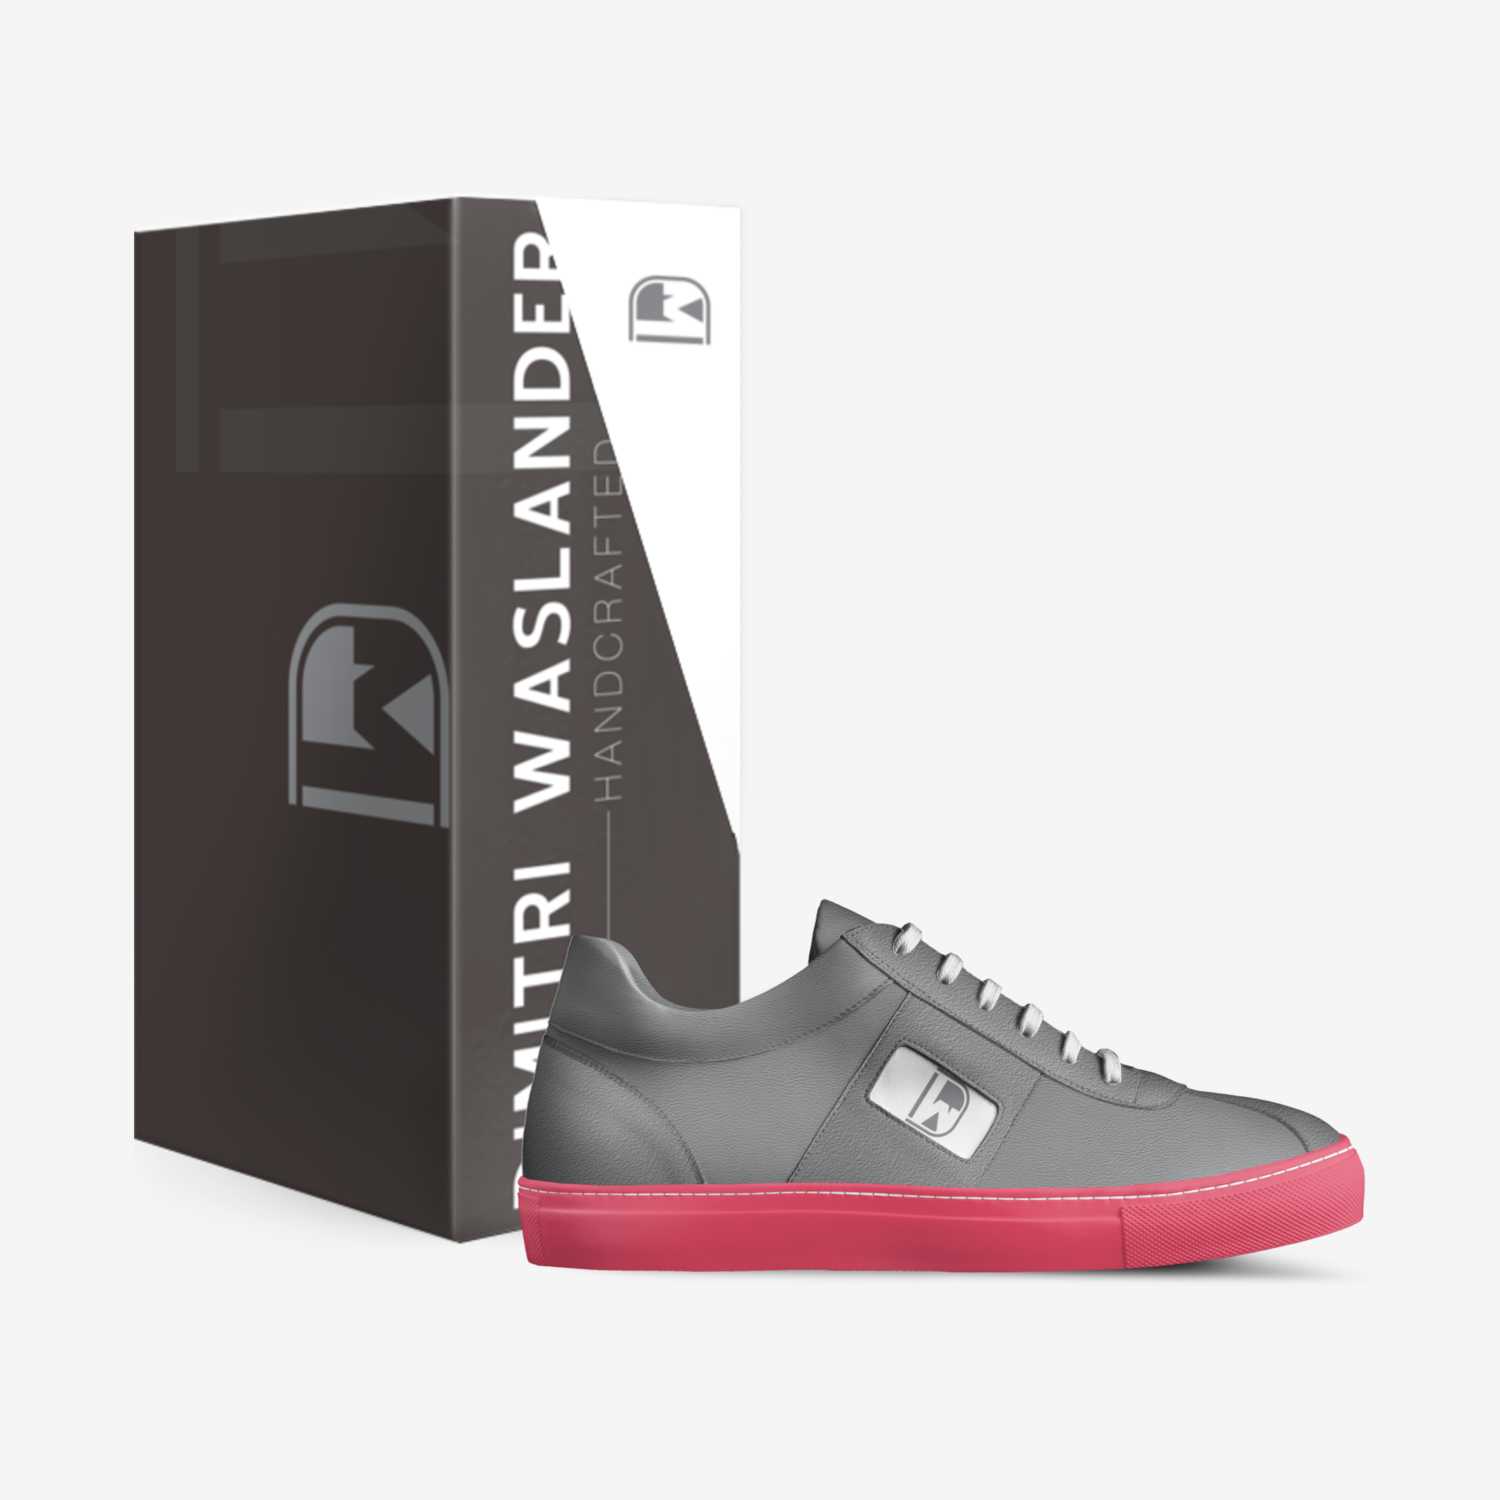 dimitri waslander custom made in Italy shoes by Dimitri Waslander | Box view